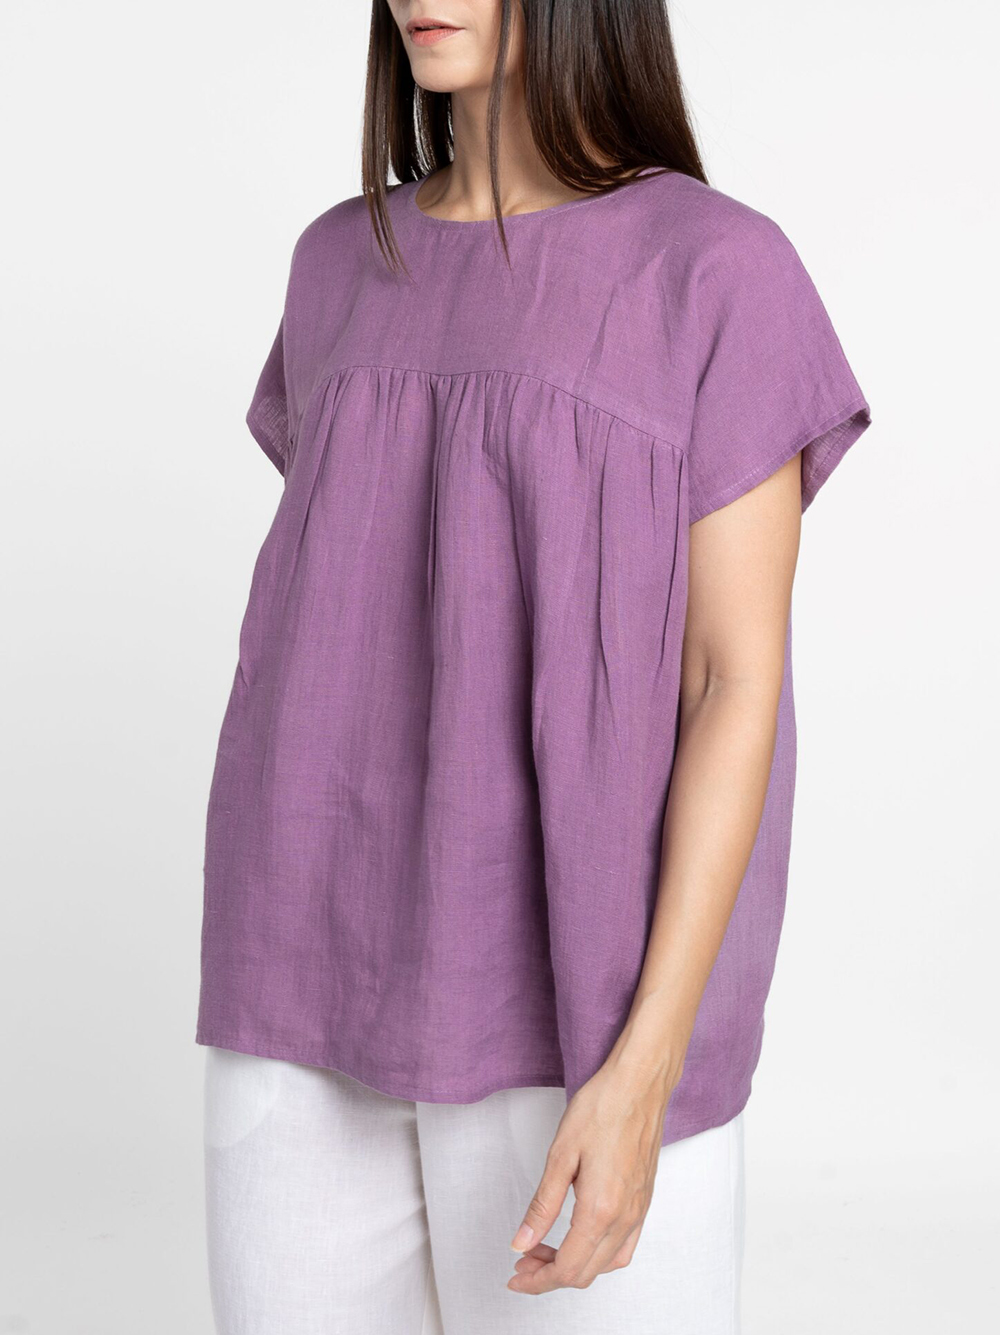 COZINEN Women's Solid Color Round Neck Short Sleeve Pullover Top